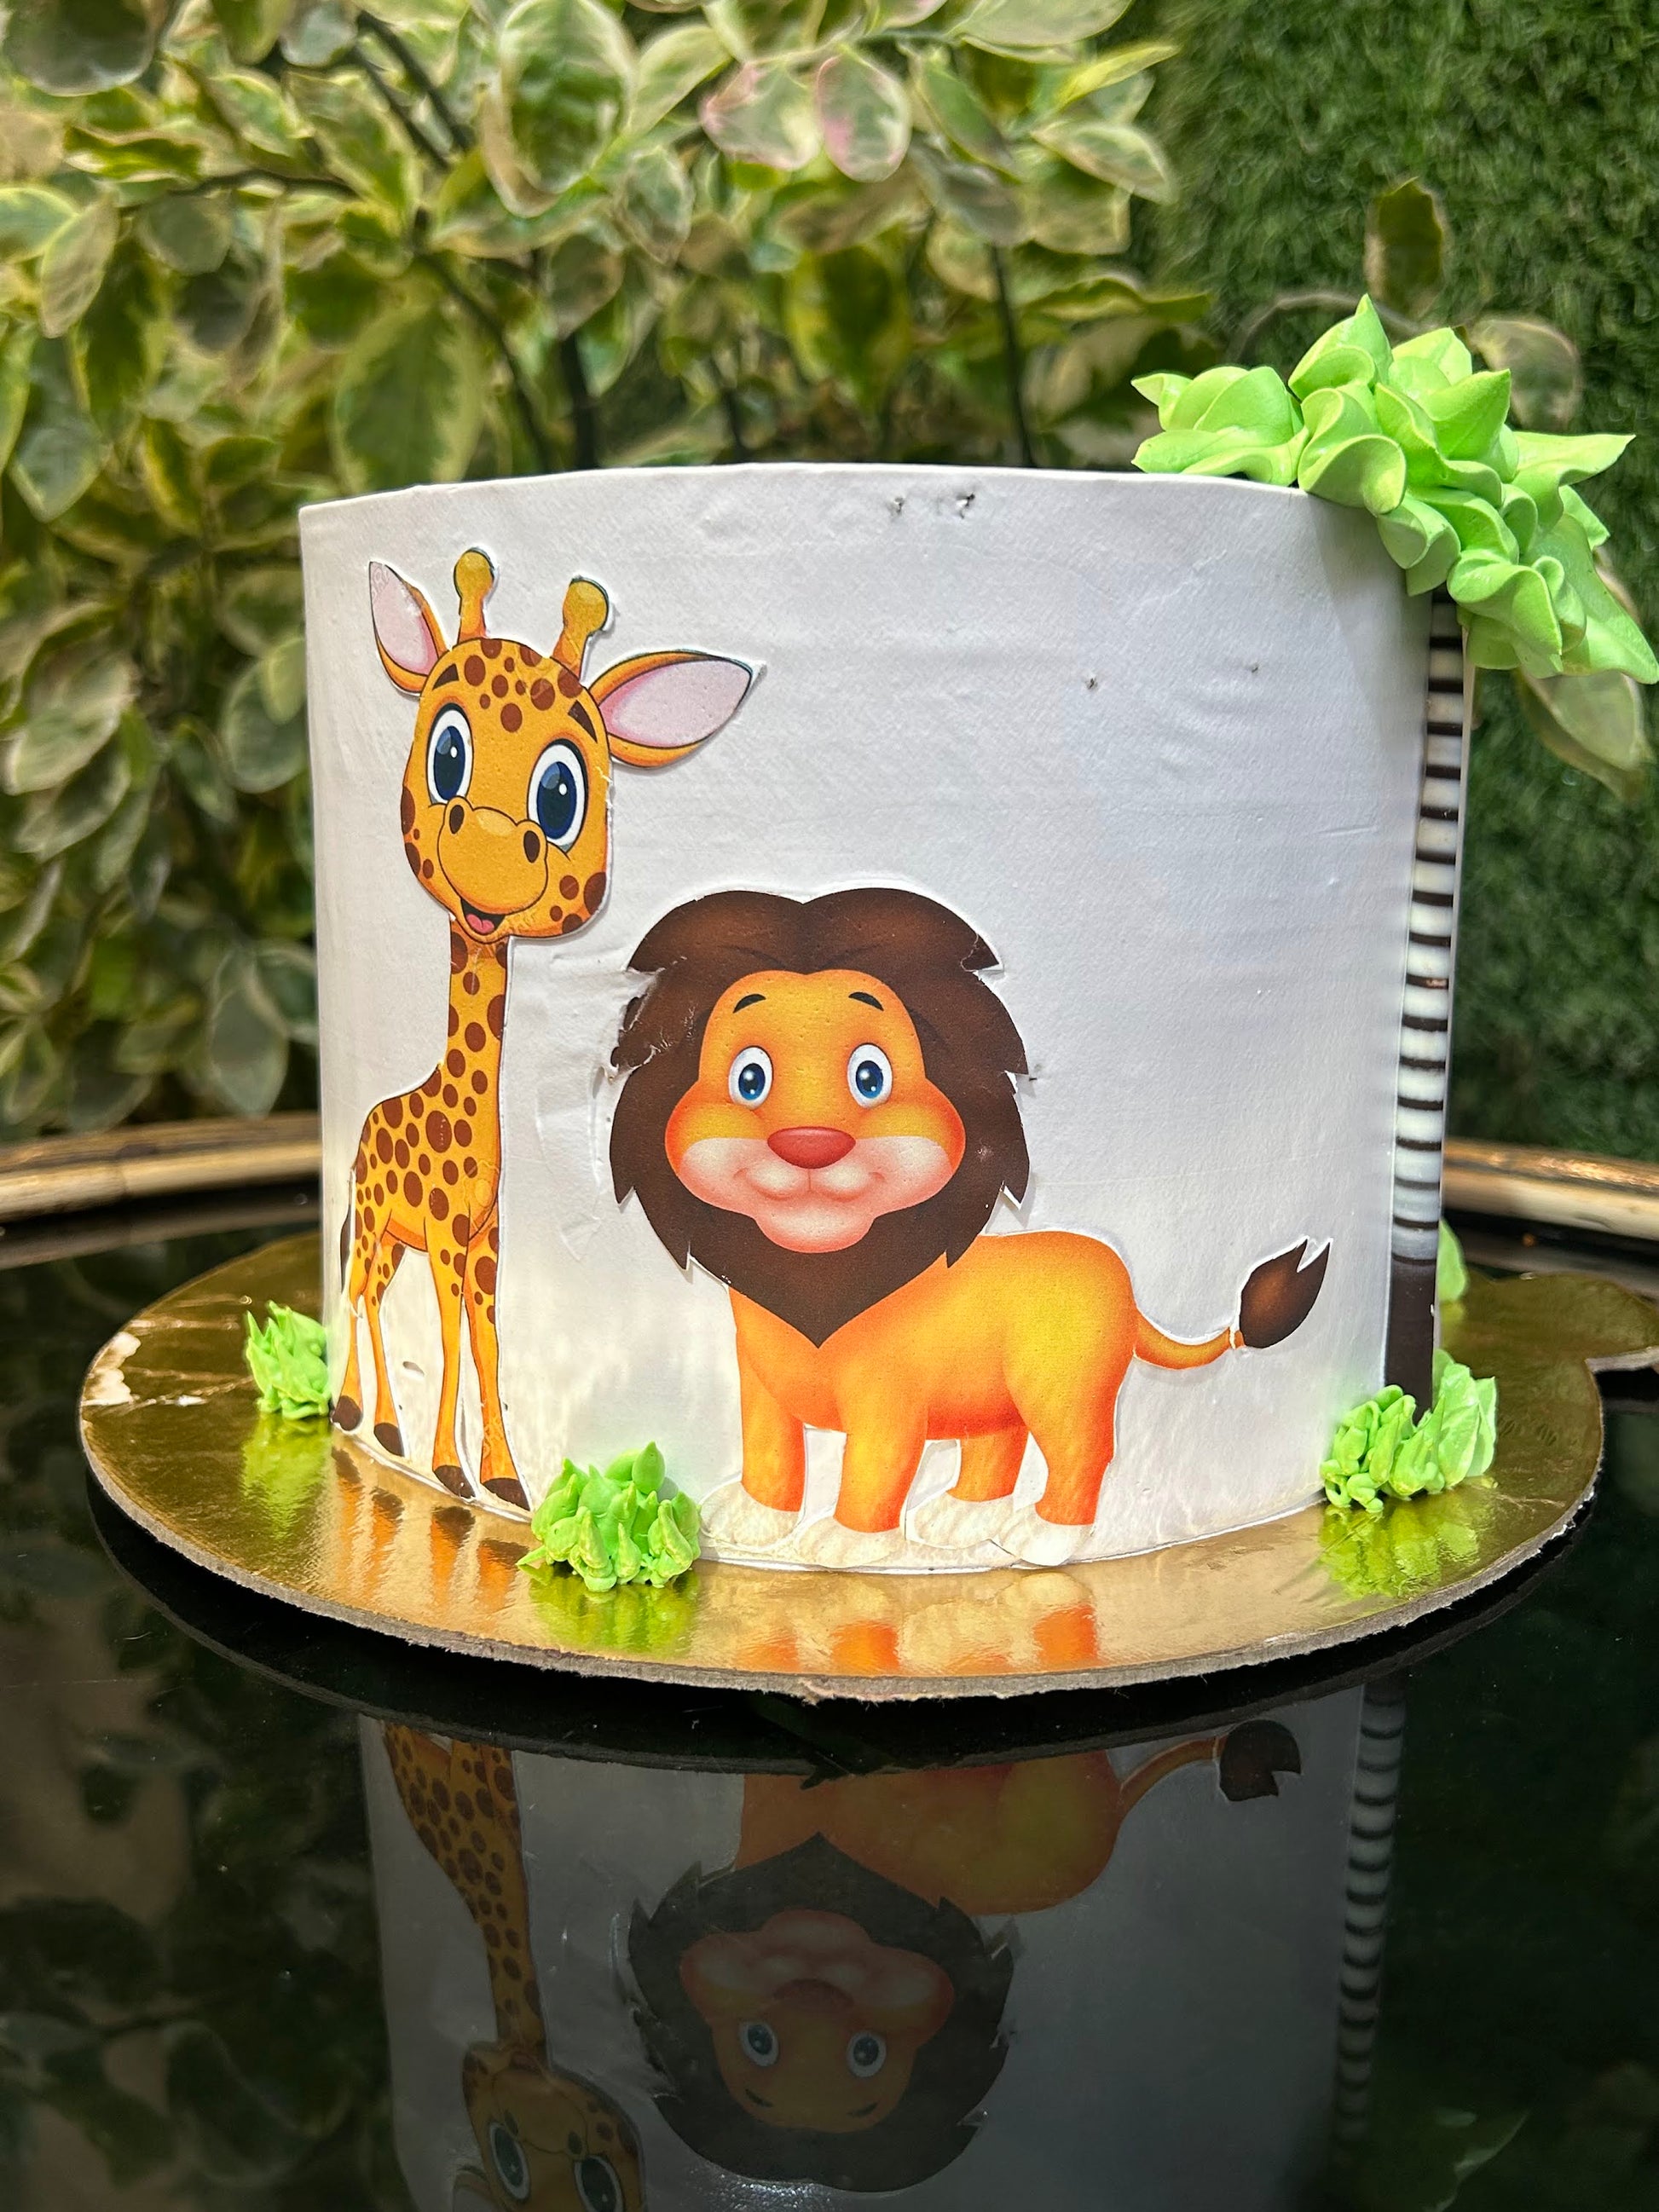 Edible Printed Jungle Theme Cake | Doon Memories